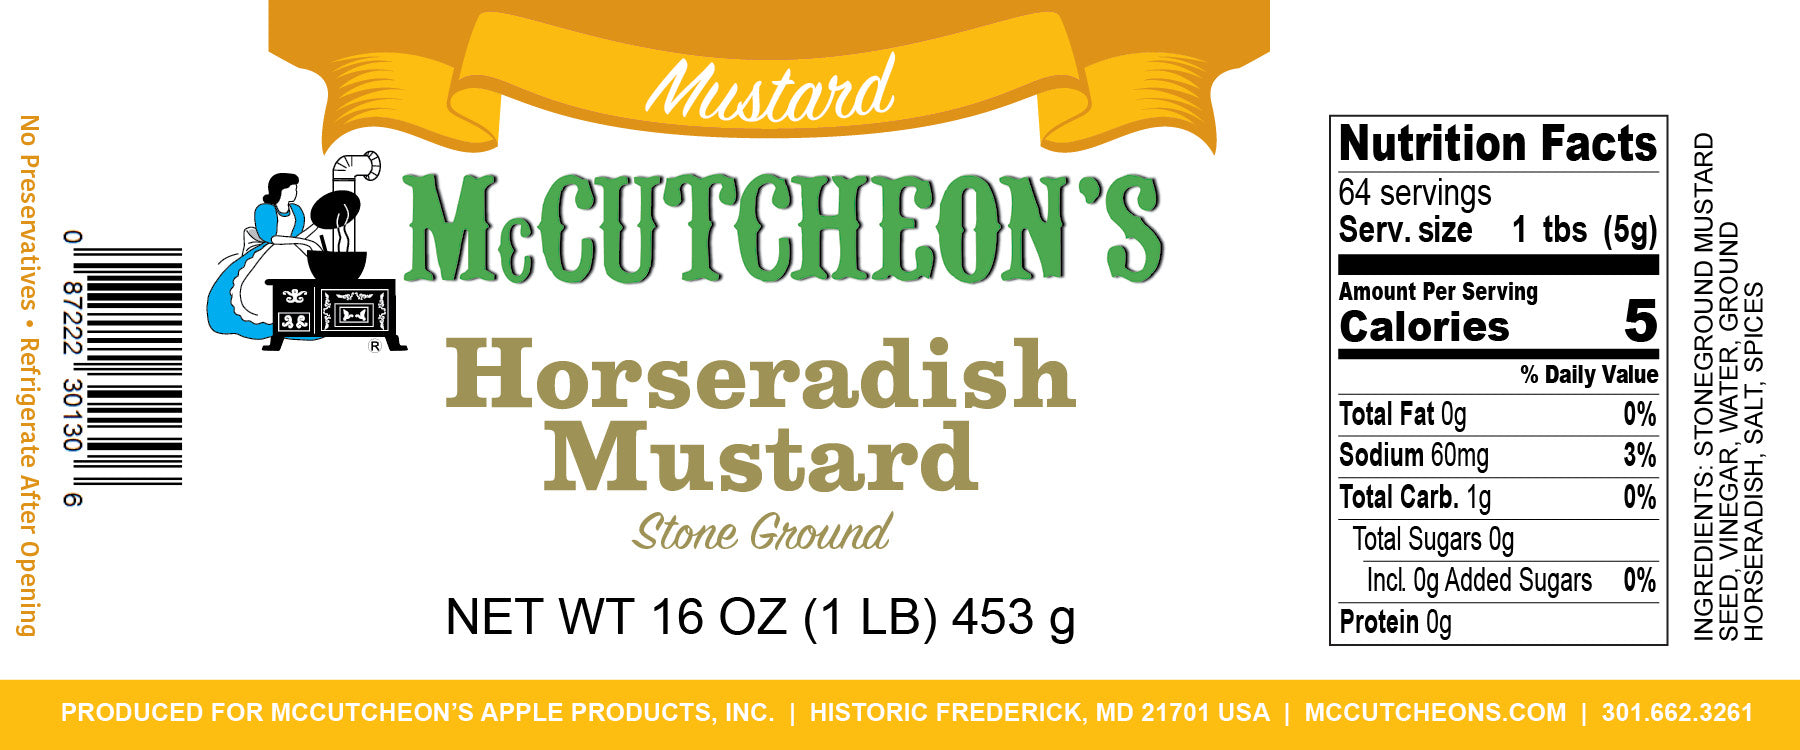 nutrition label for McCutcheon's stone ground horseradish mustard